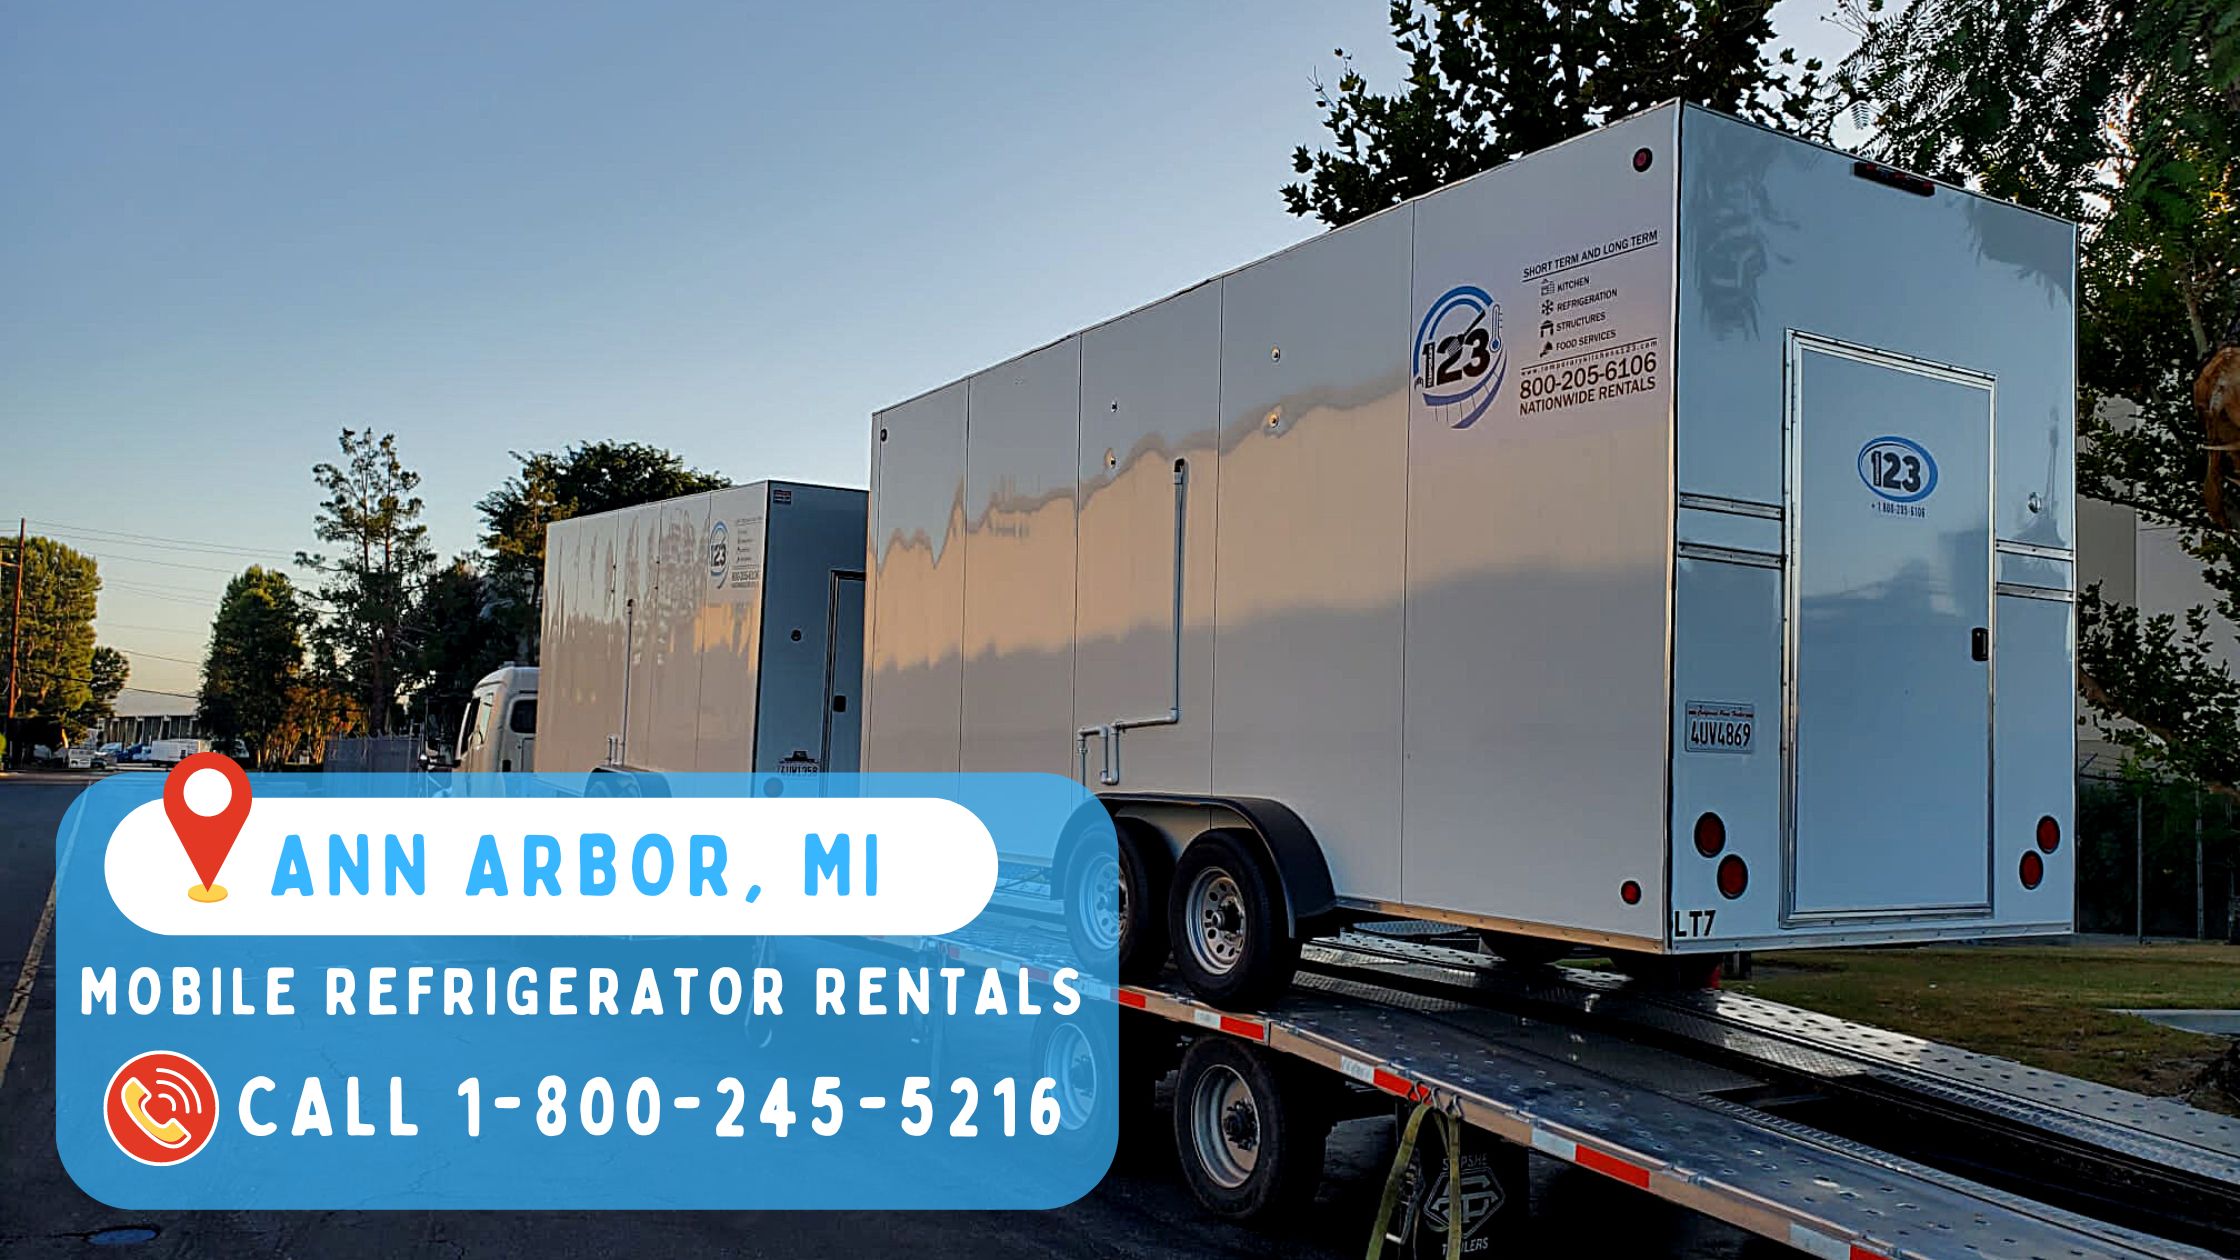 Mobile refrigerator rentals in Ann Arbor, MI